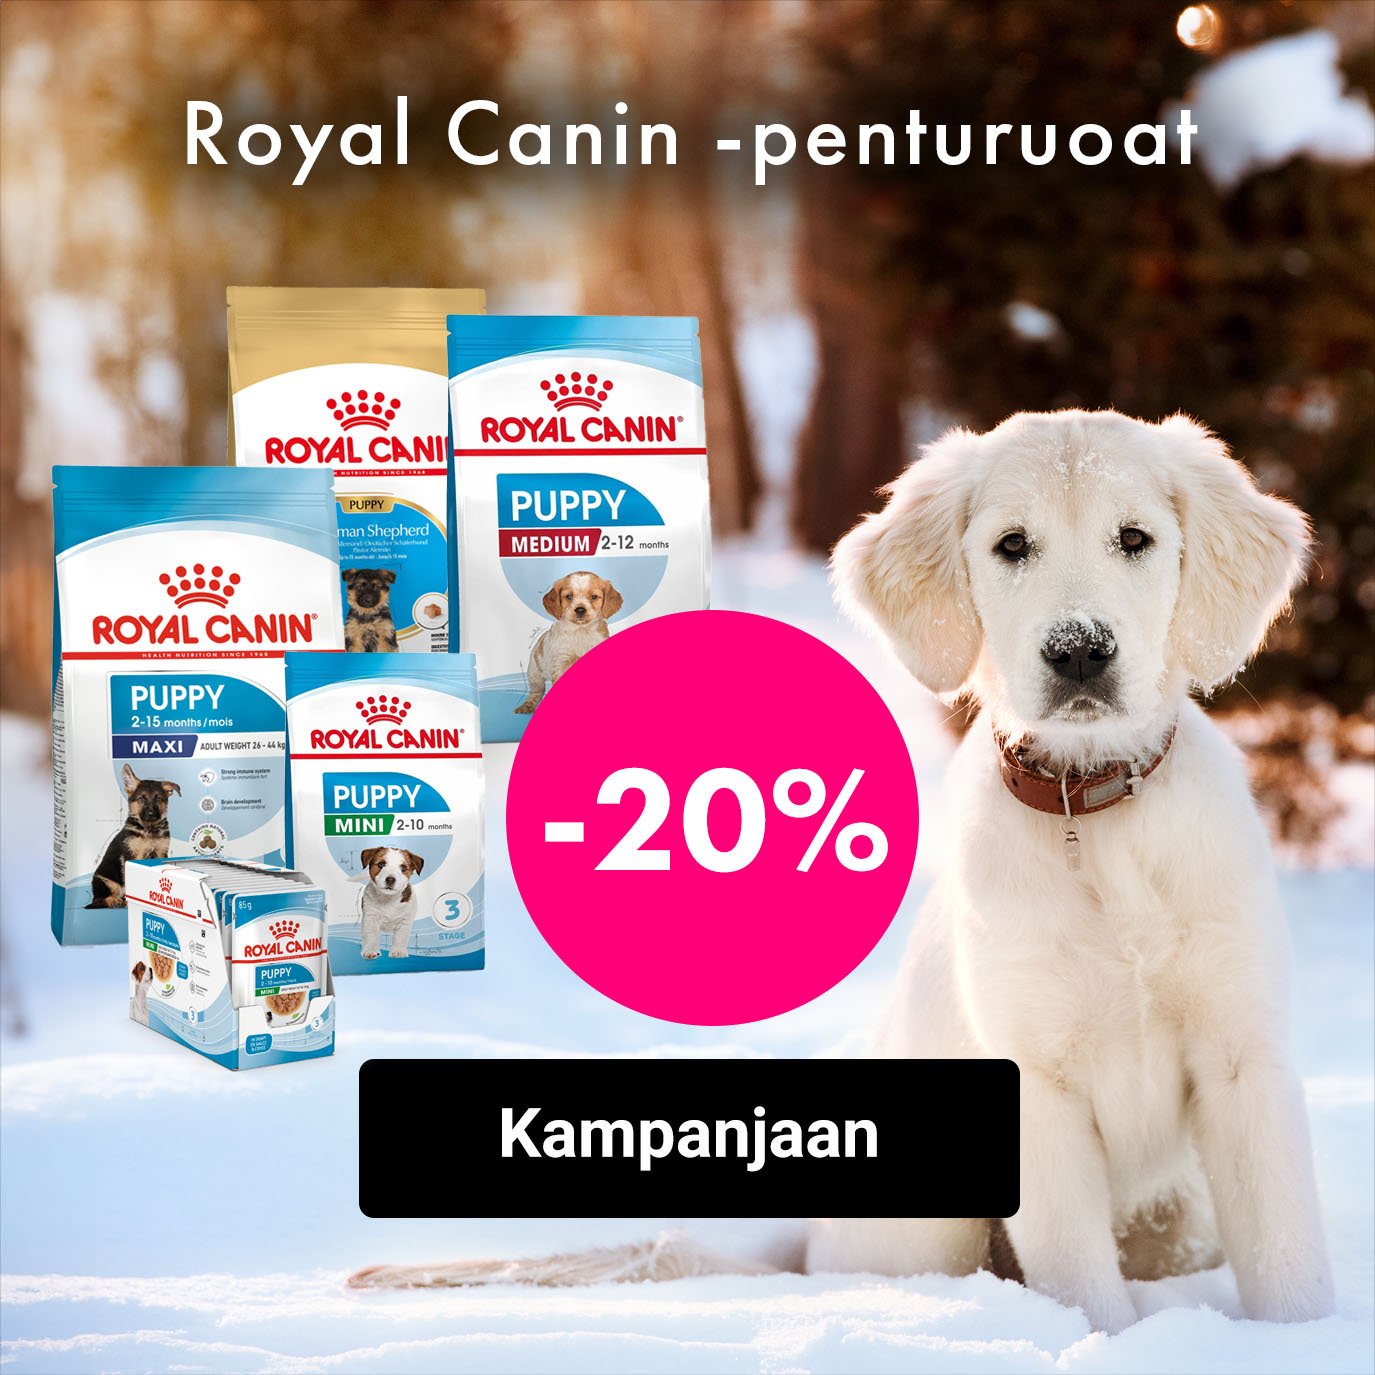 Royal Canin koiranpennulle -20%